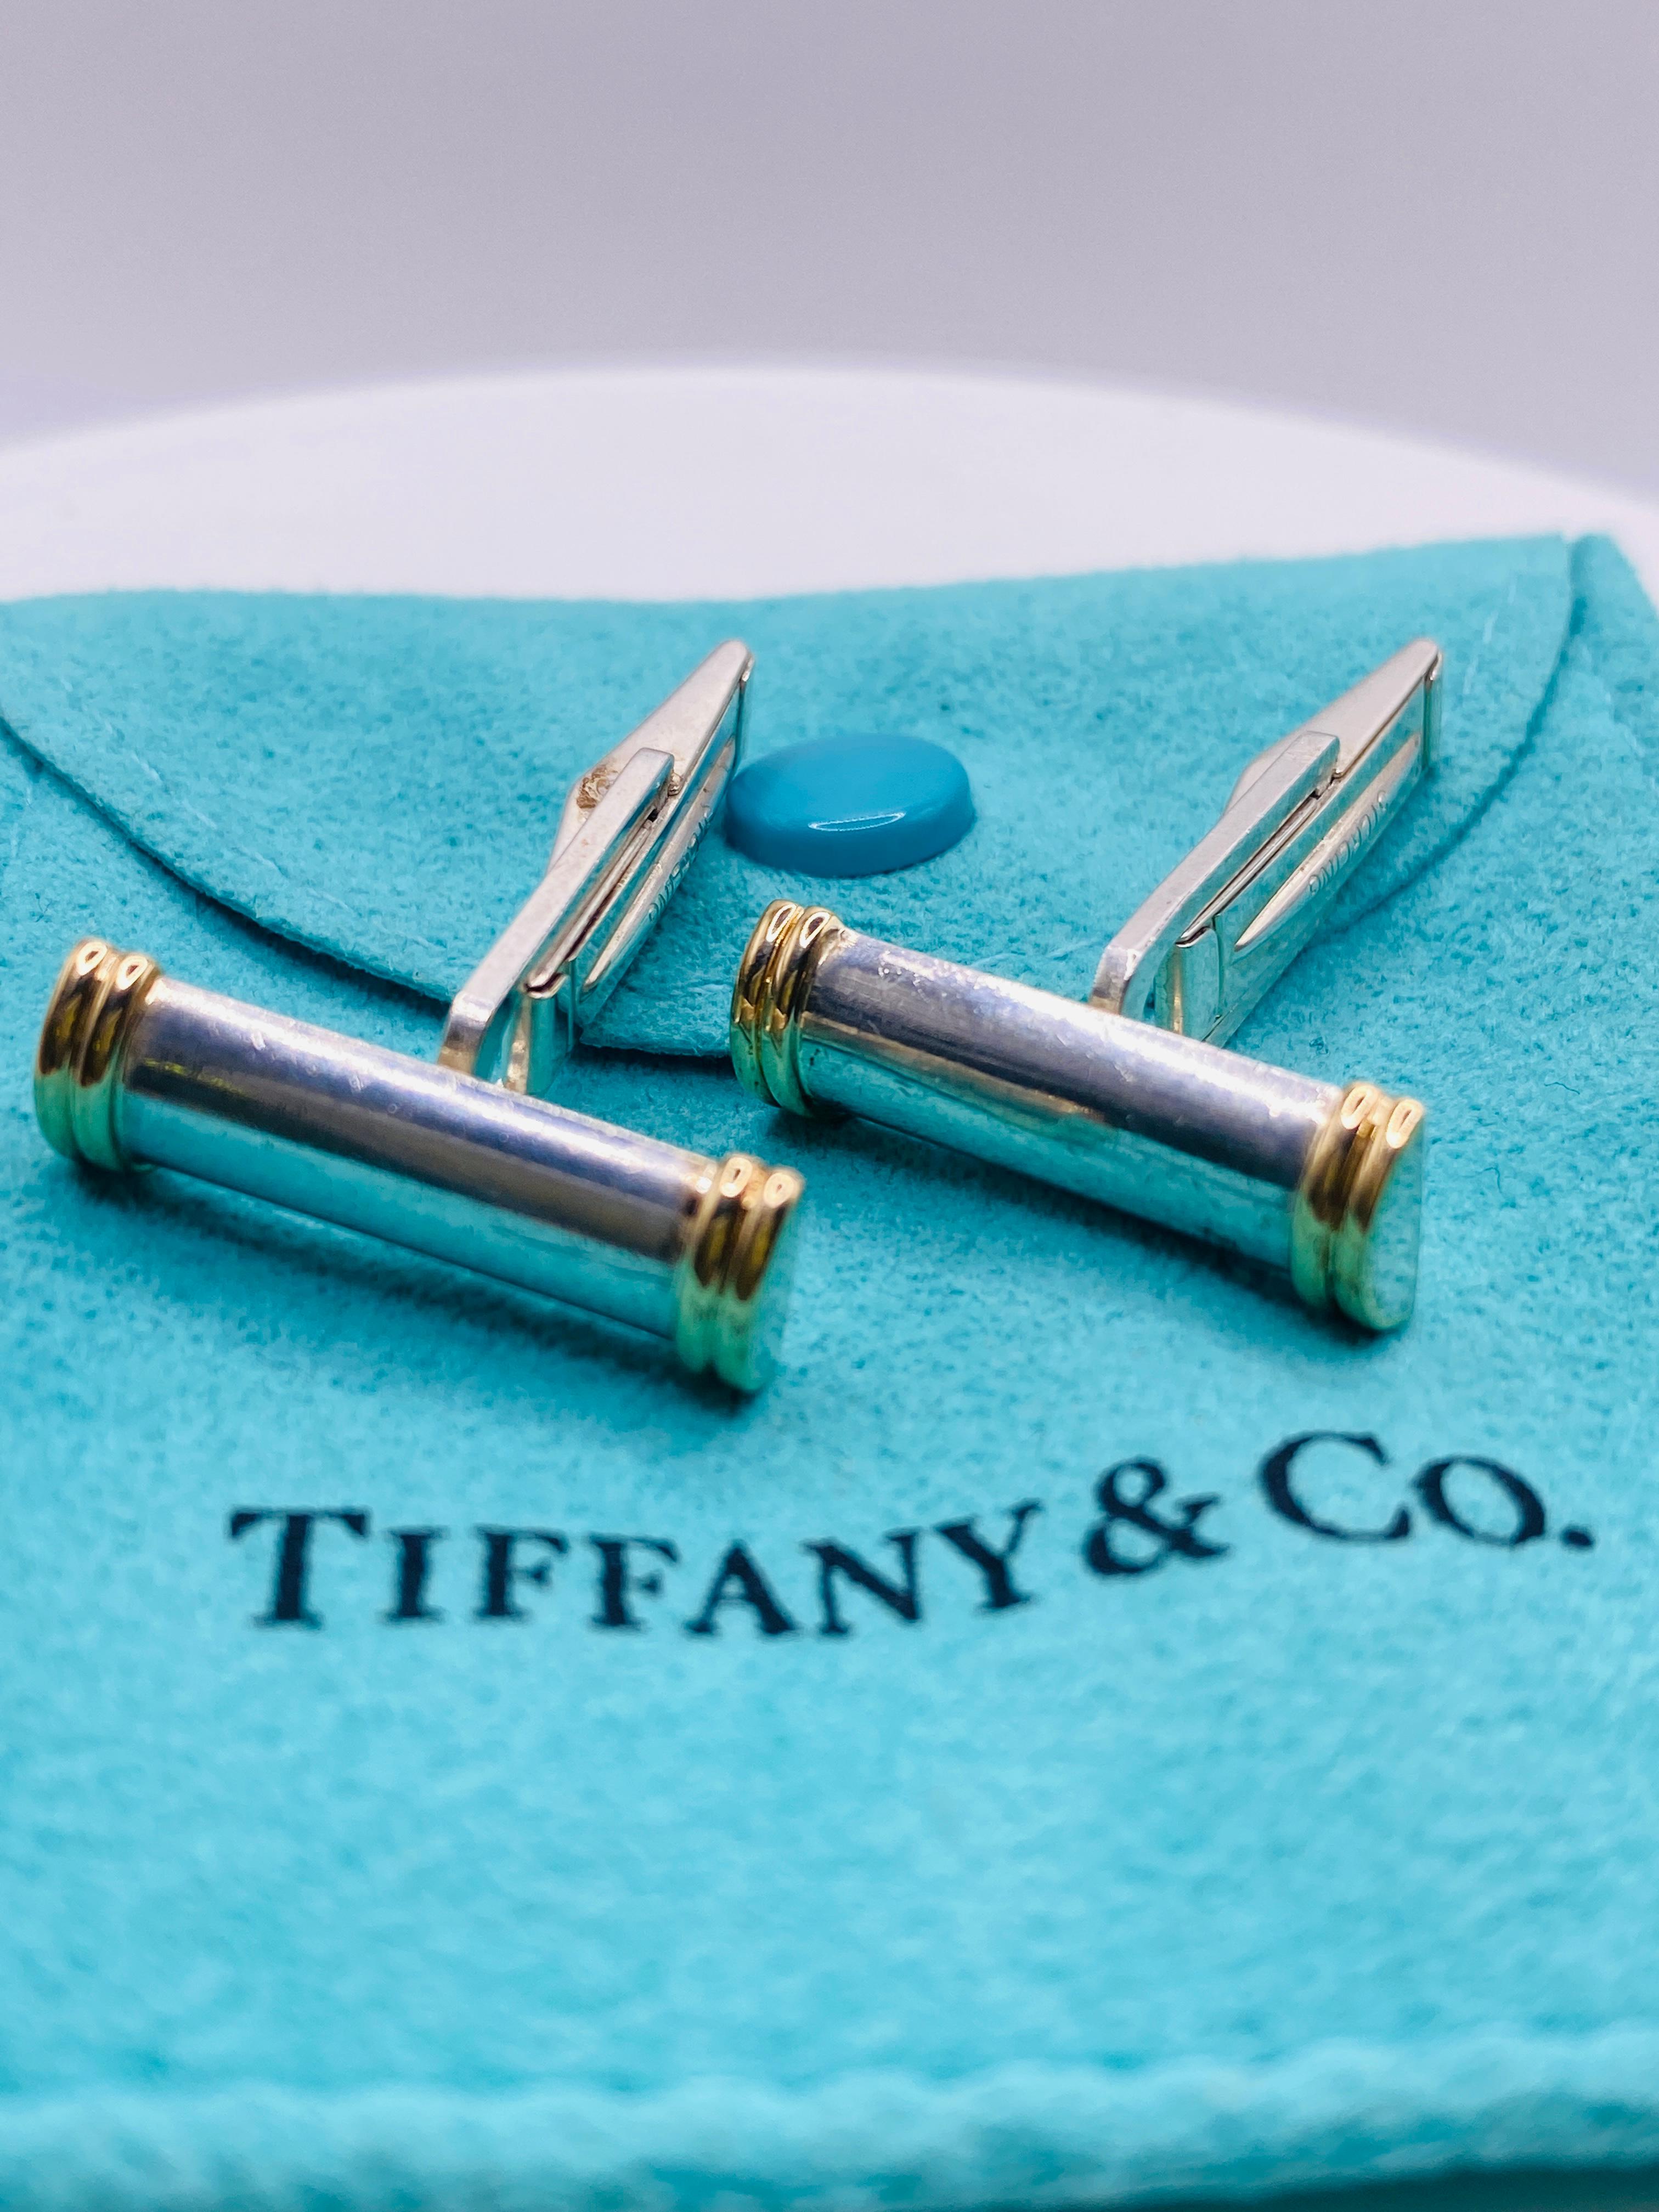 Tiffany & Co. Sterling Silver 925 18k yellow gold bar cuff links. Bar length 3/4 inch. 7.2Dwt